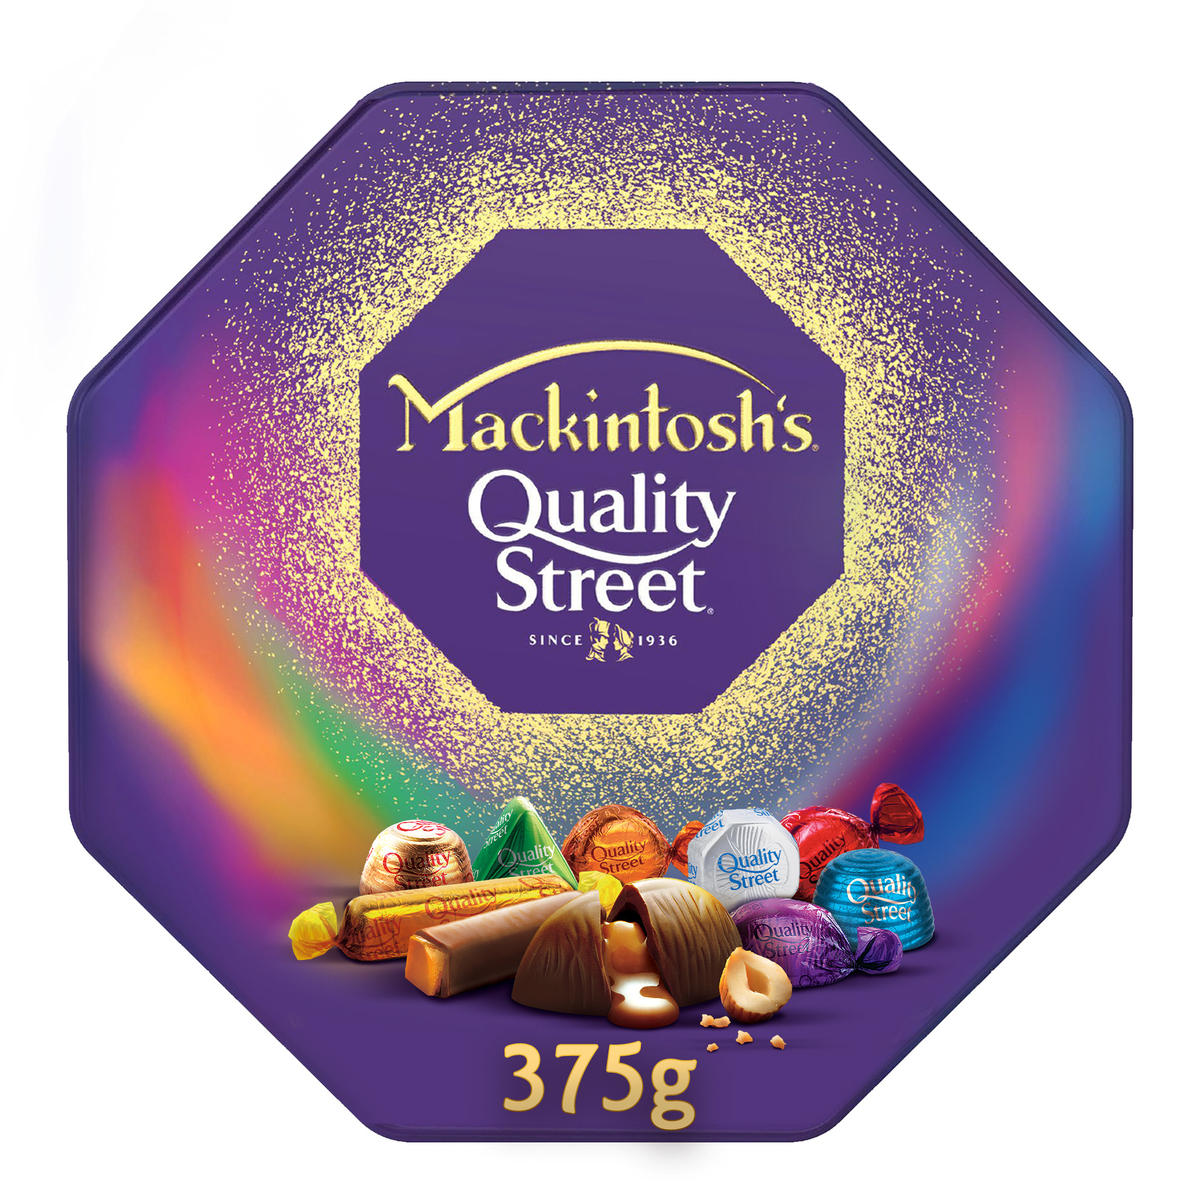 Quality Street. Шоколад стрит Бип. MCINTOSH'S quality Street Chocolate Box. Quality Street конфеты купить.